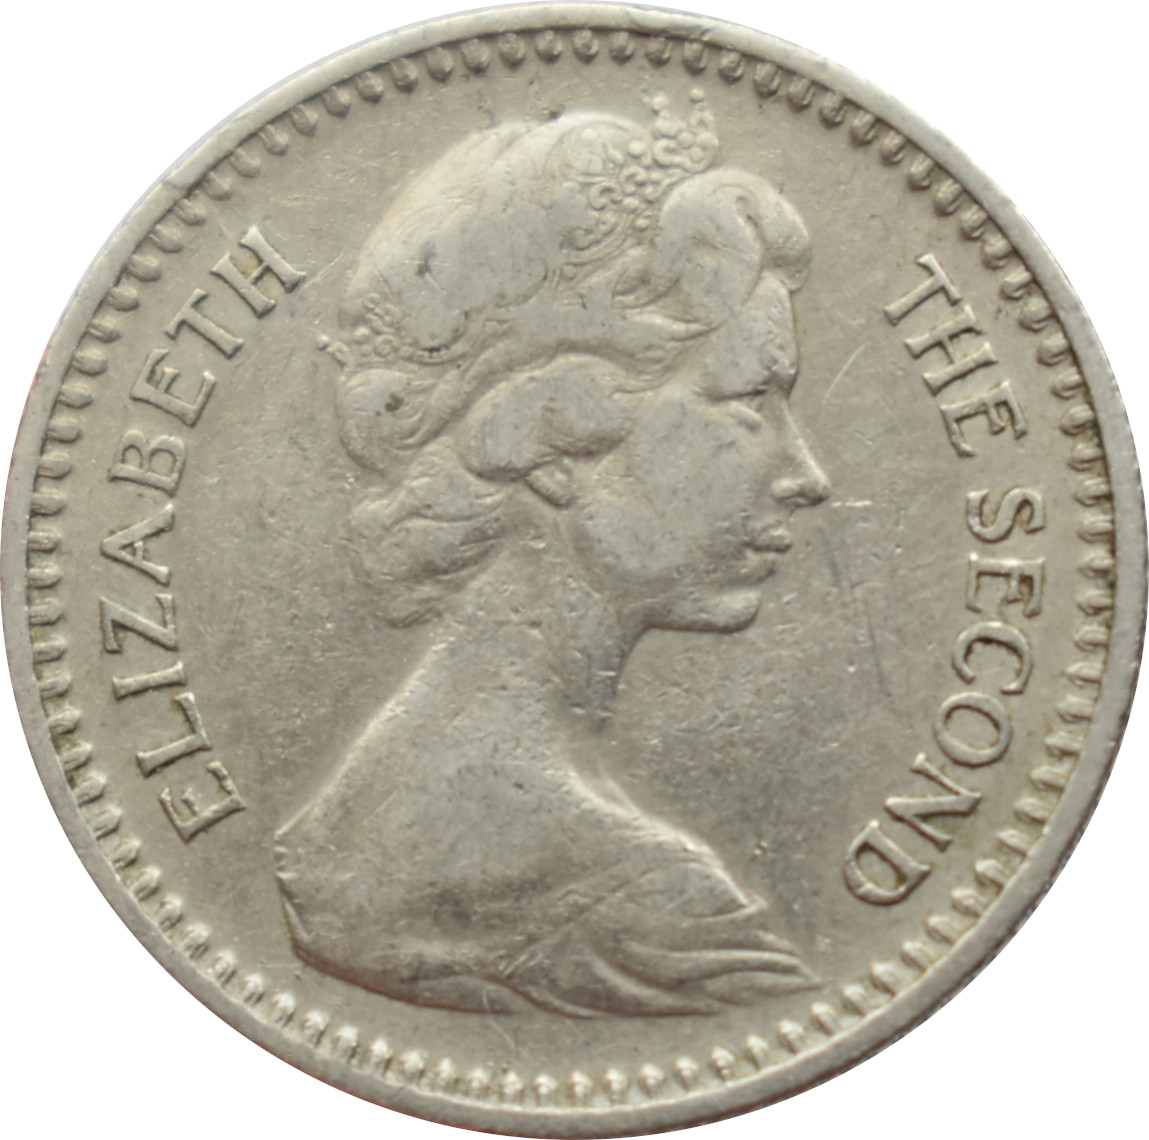 Rodézia 1 Shilling 1964